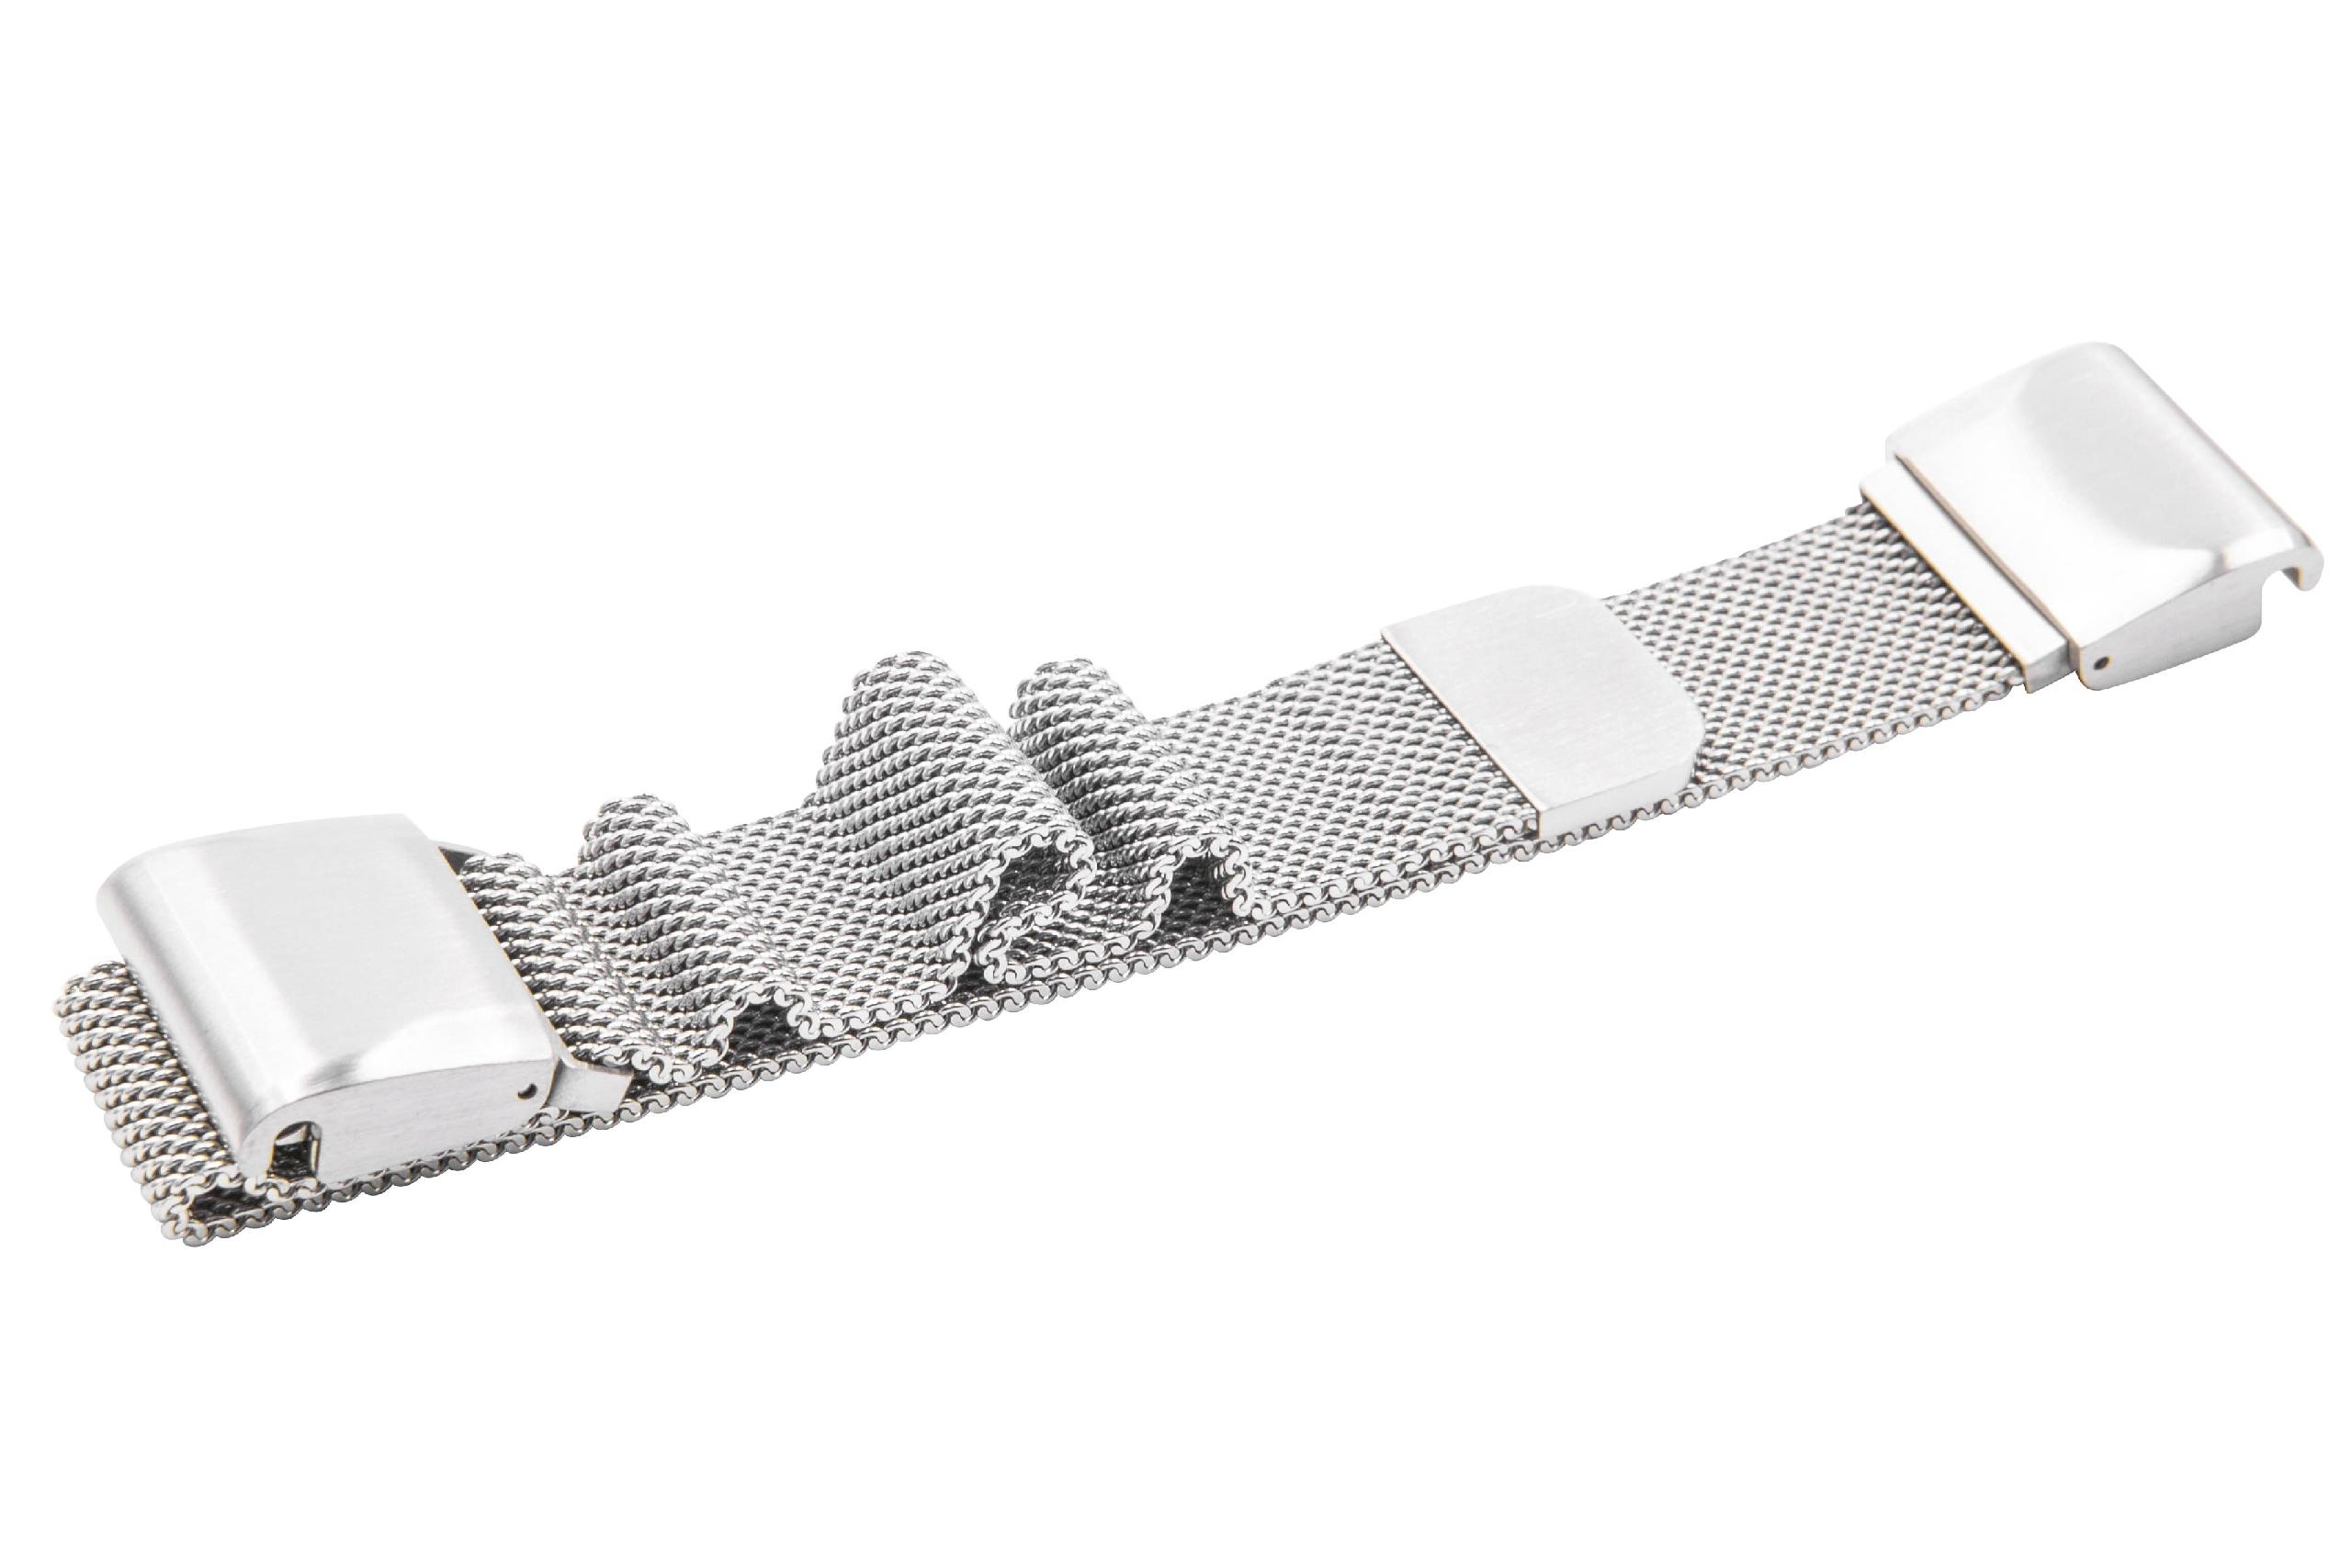 Armband für Garmin Fenix Smartwatch - Bis 248 mm Gelenkumfang, Edelstahl, silber